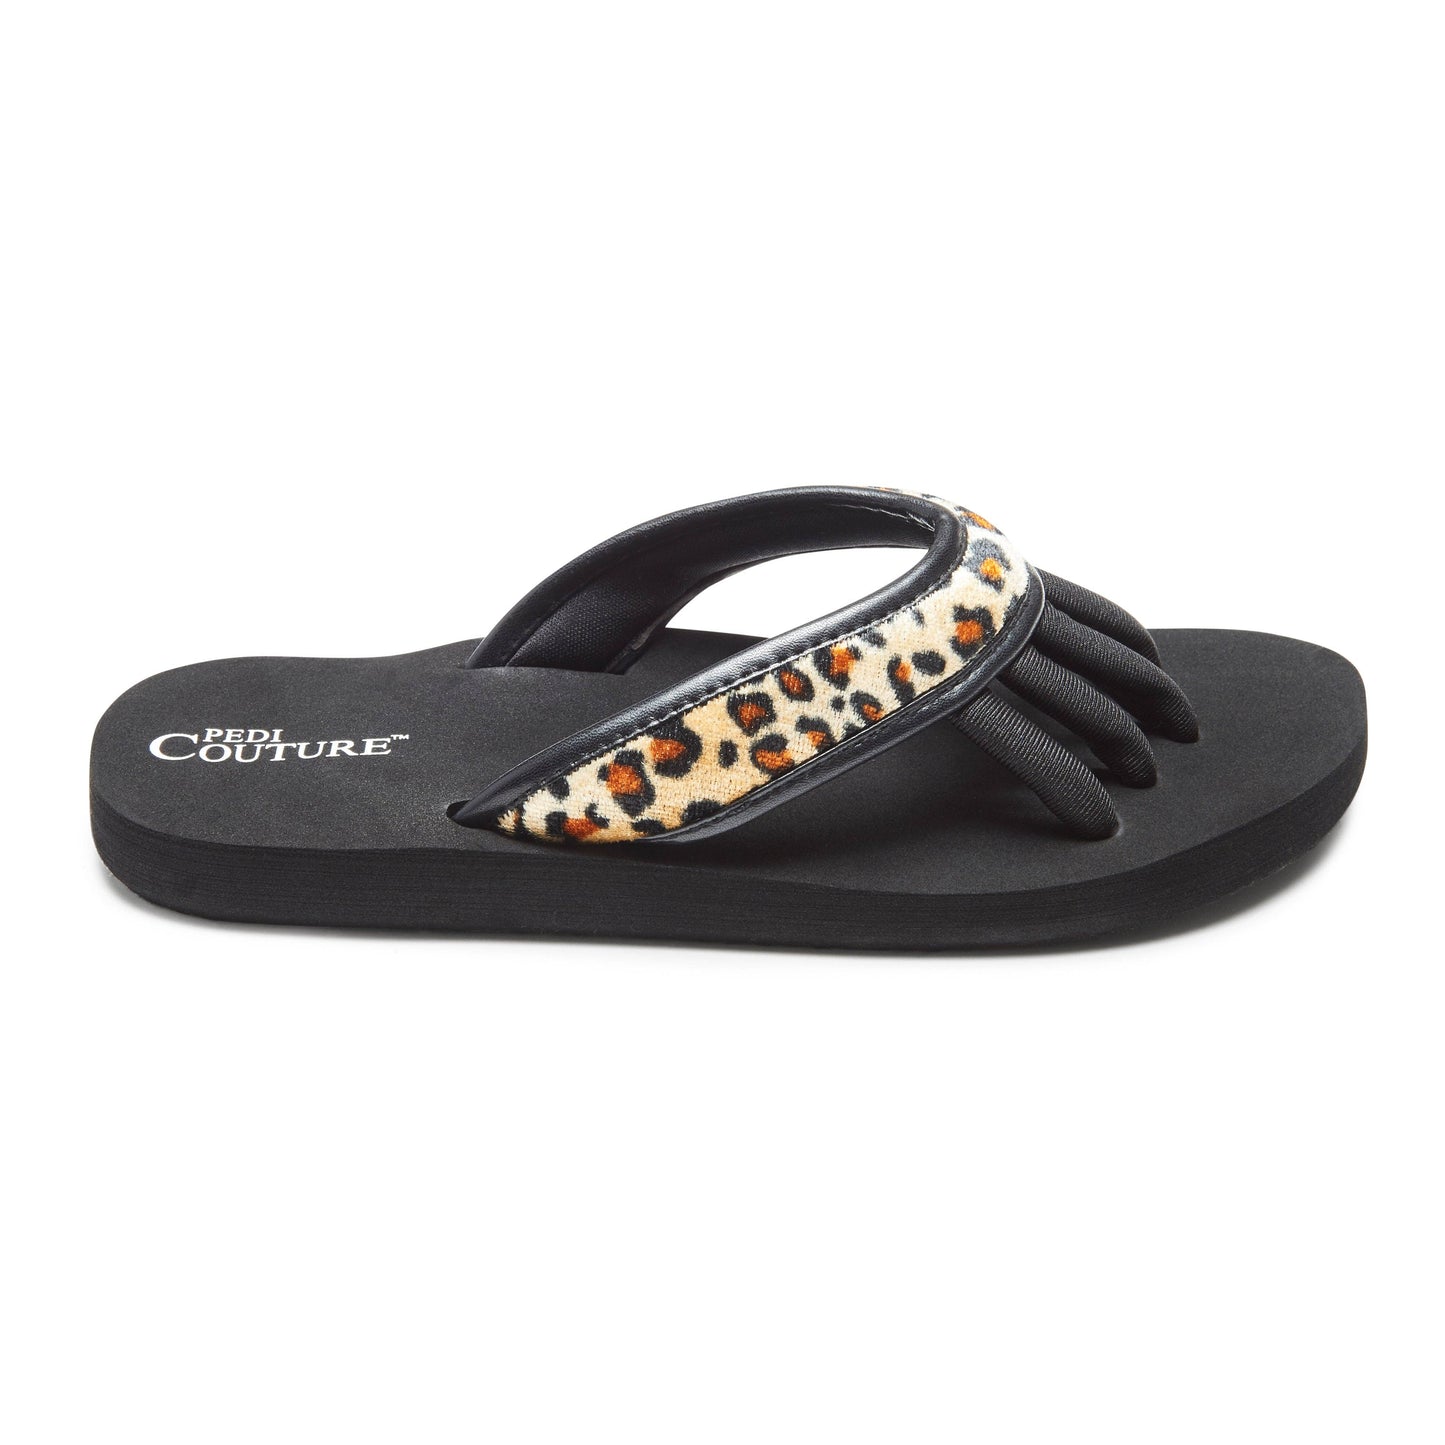 Pedi Couture - Leopard: XL (10 - 11 US)